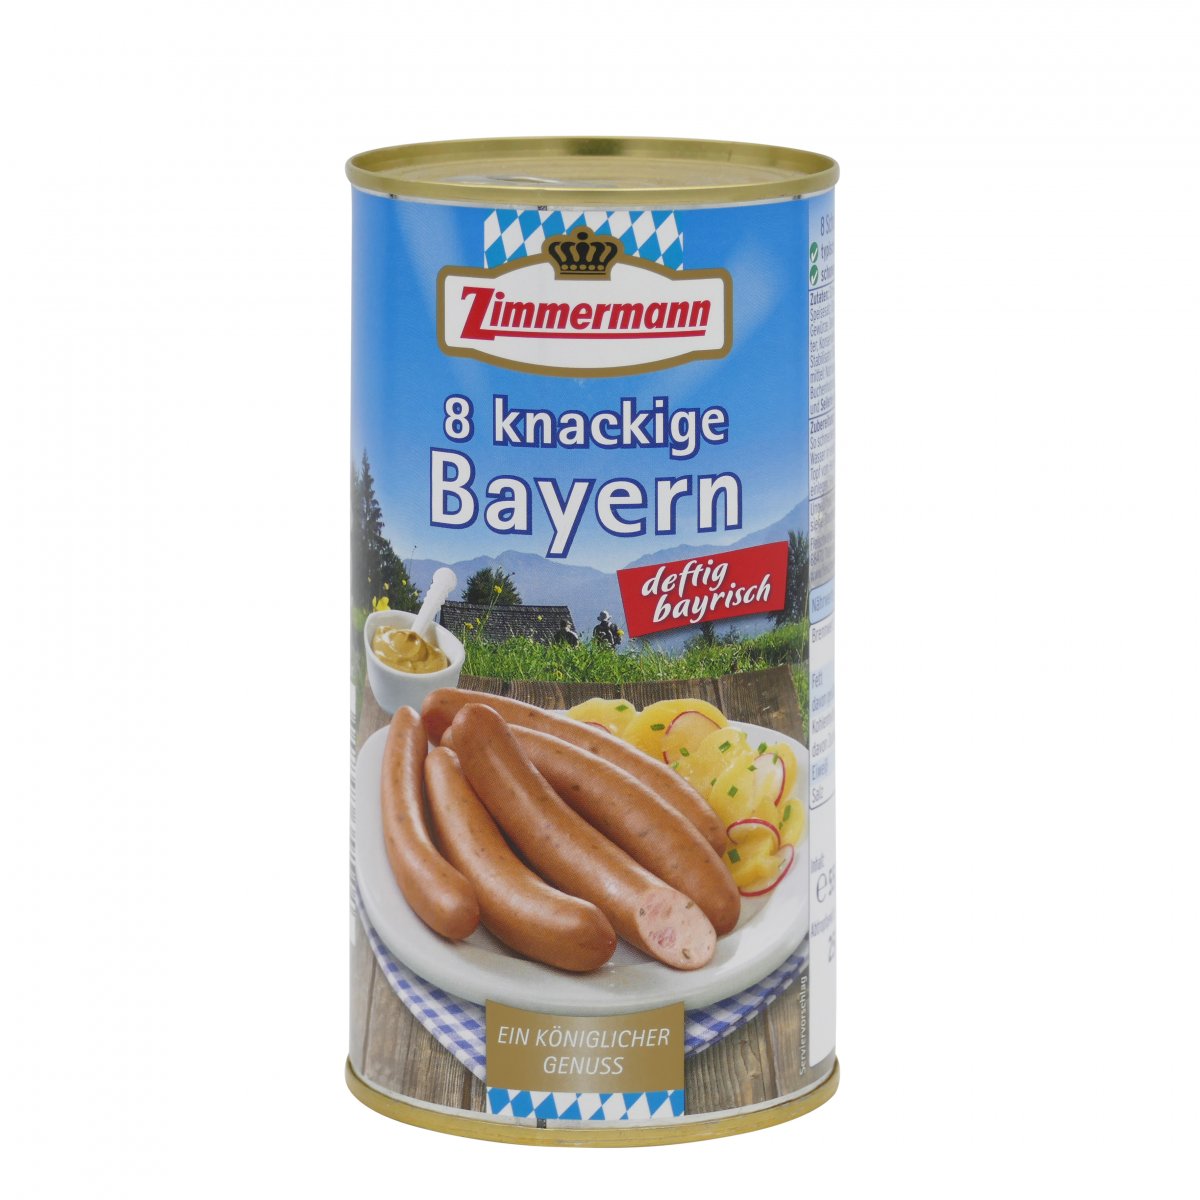 Zimmermann 8 knackige Bayern 8 Wurstel Croccanti gluten-free